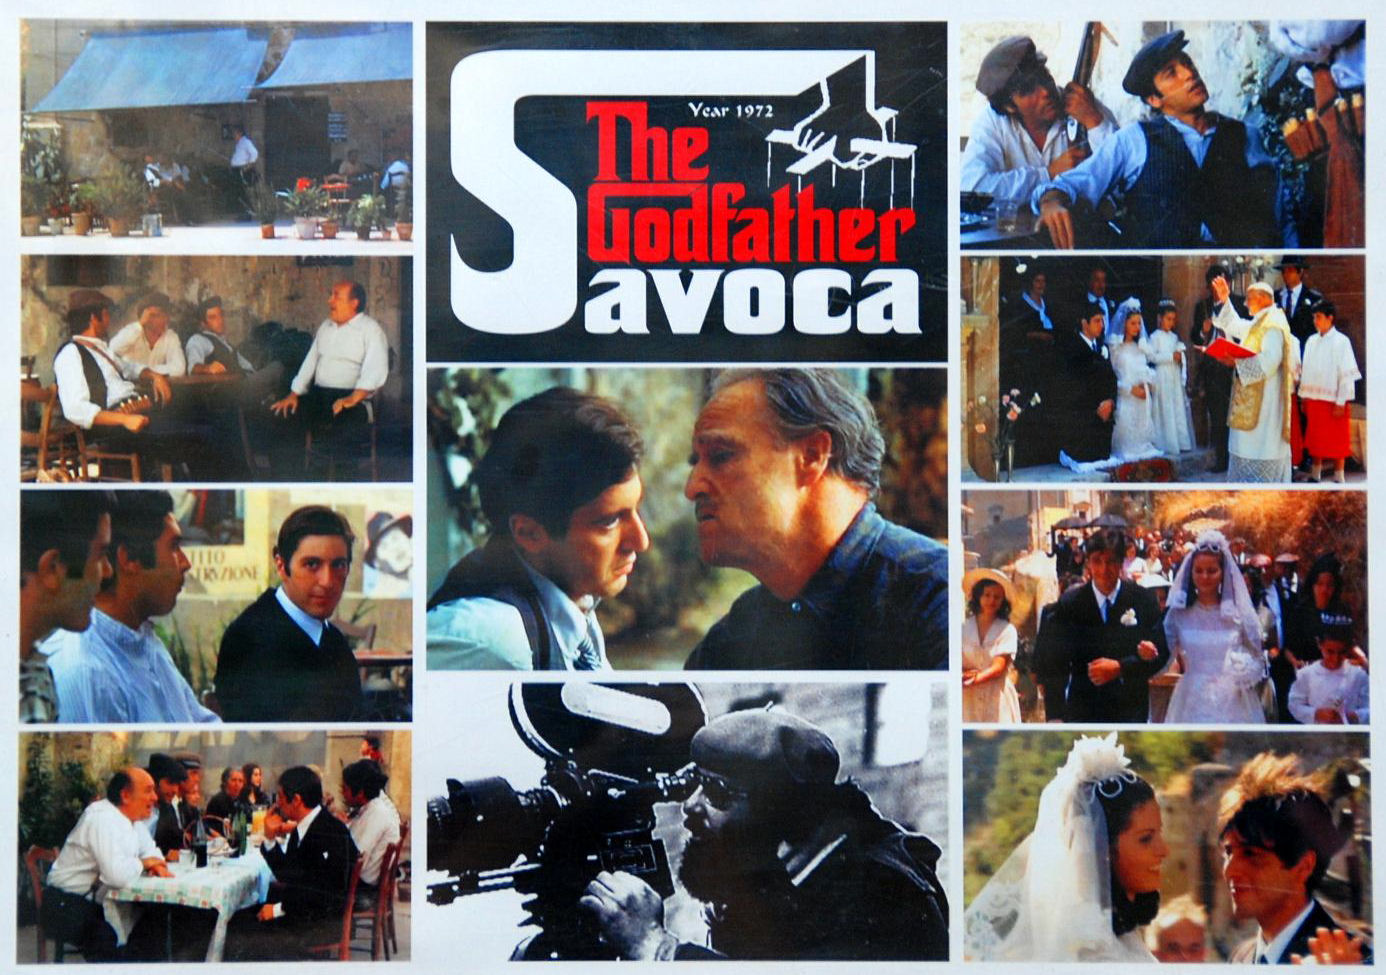 [Godfather+Savoca+Poster+For+Blog.jpg]